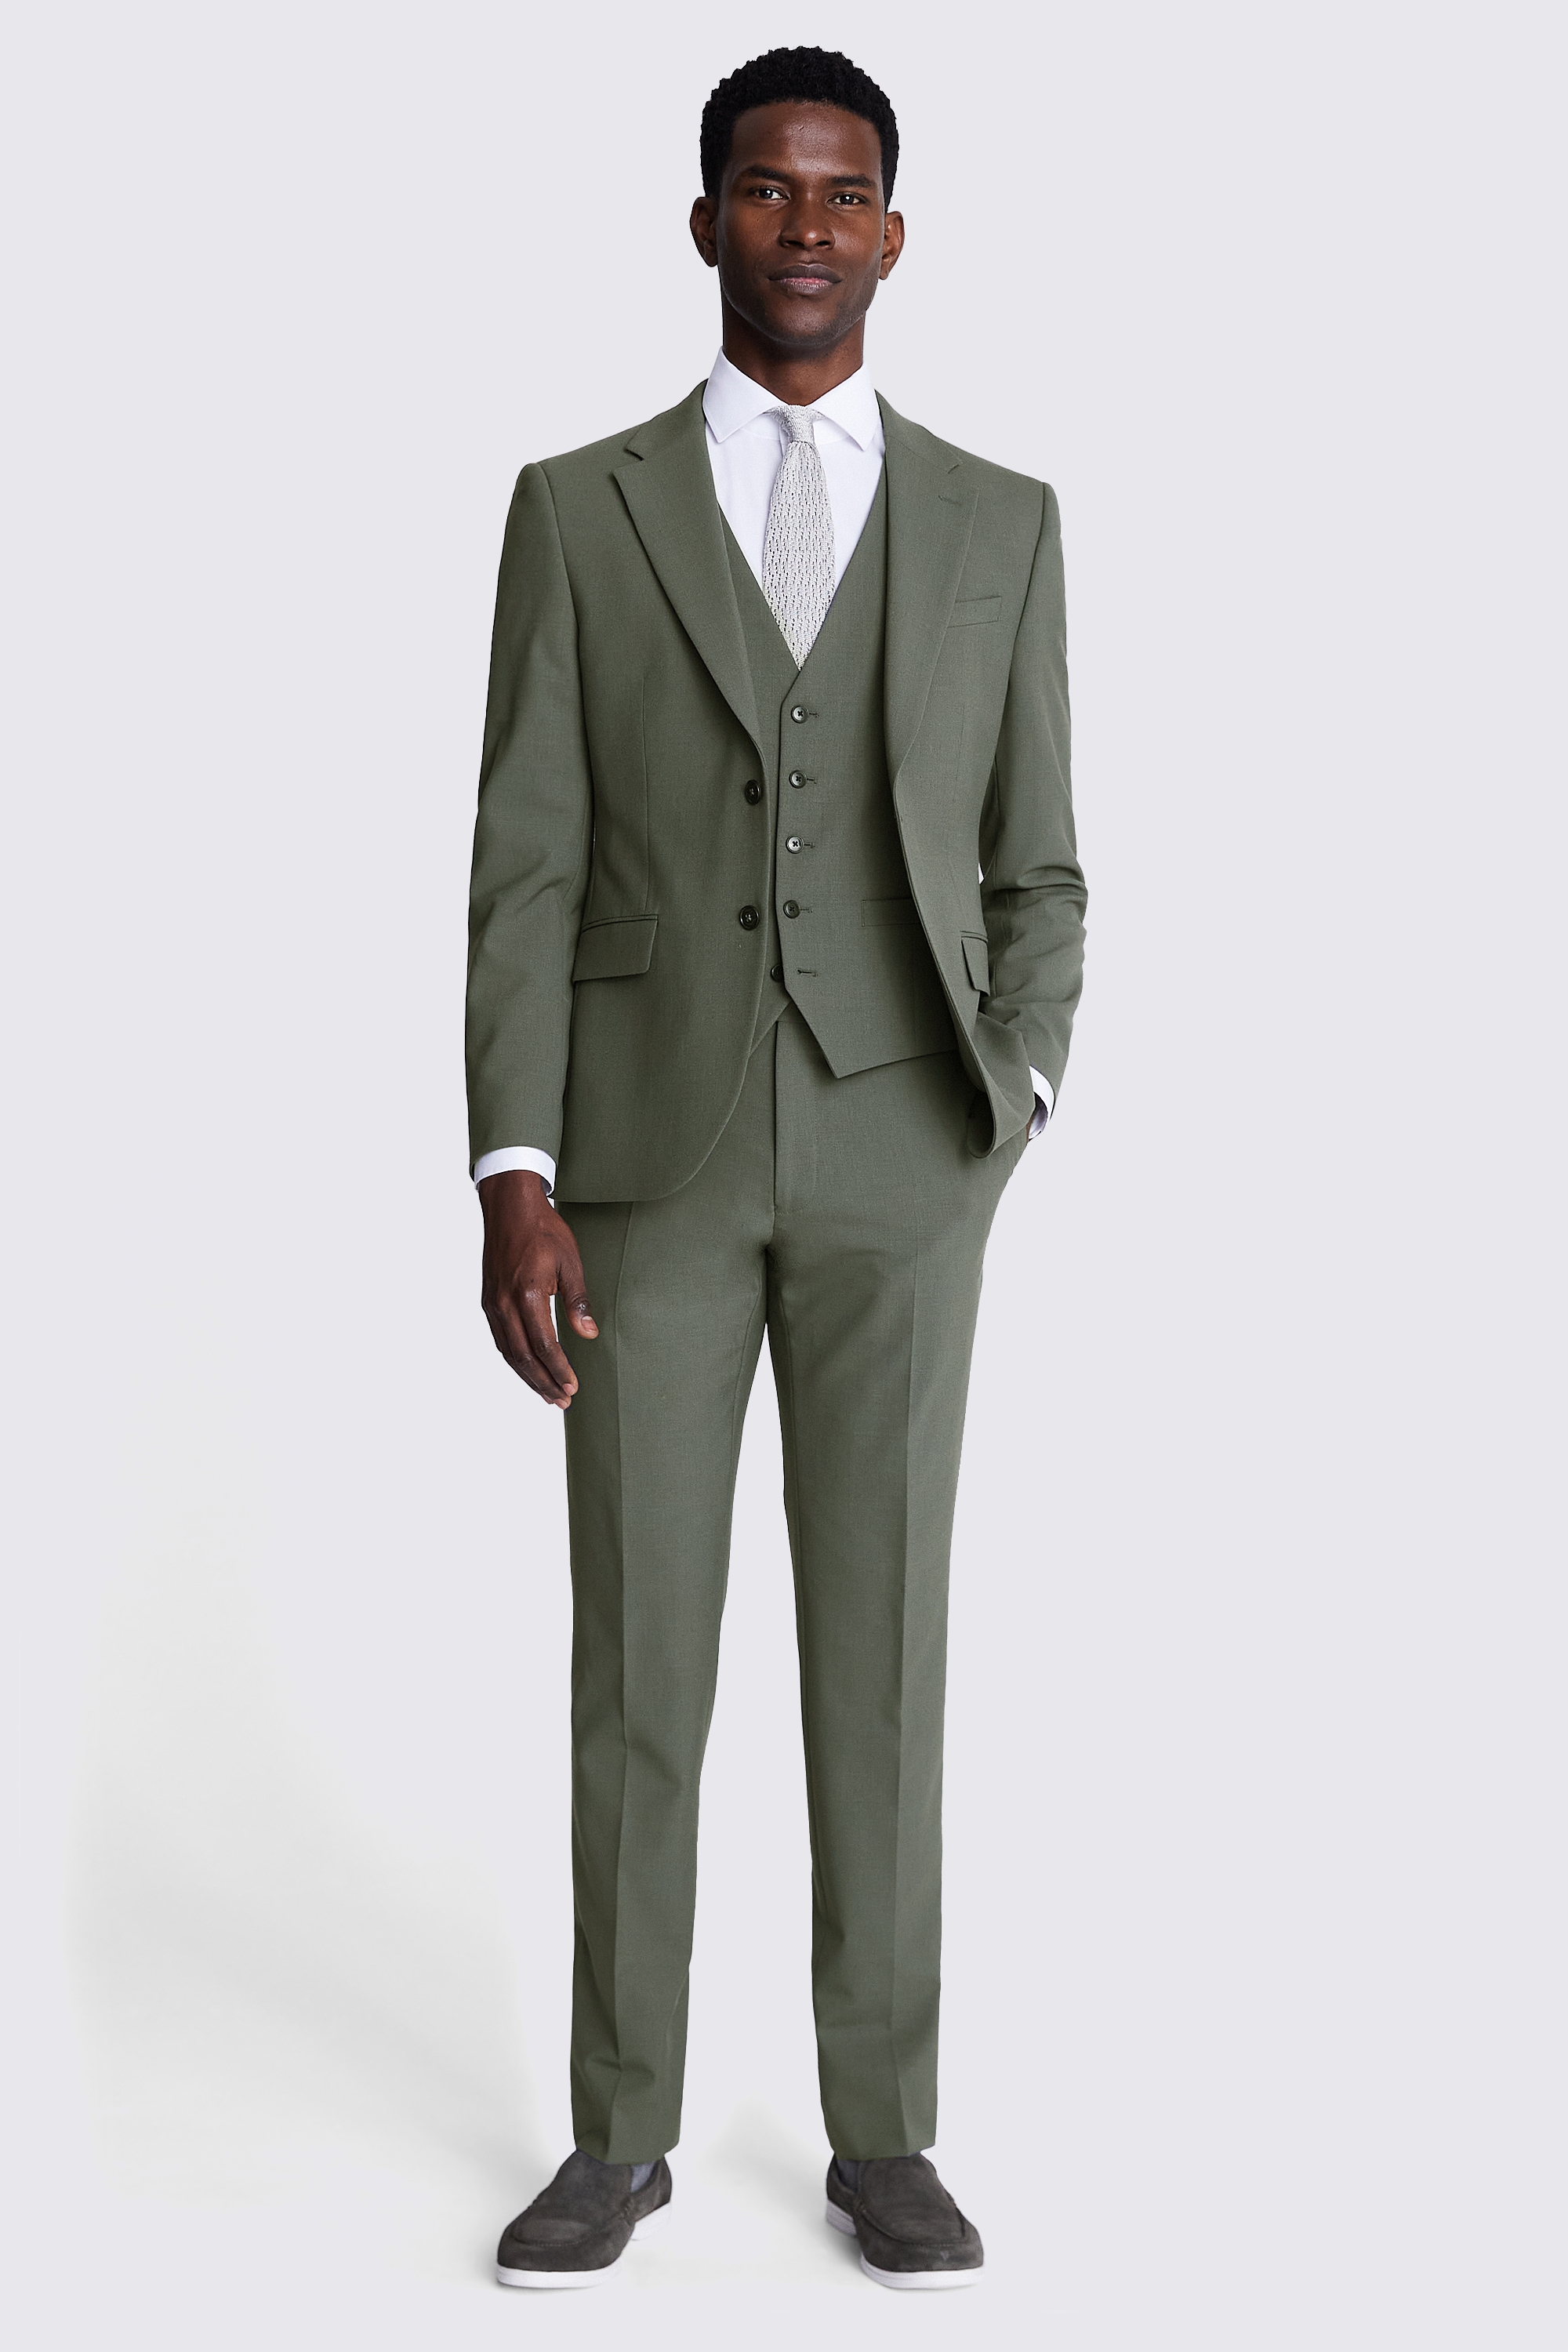 DKNY Slim Fit Sage Green Jacket | Buy Online at Moss